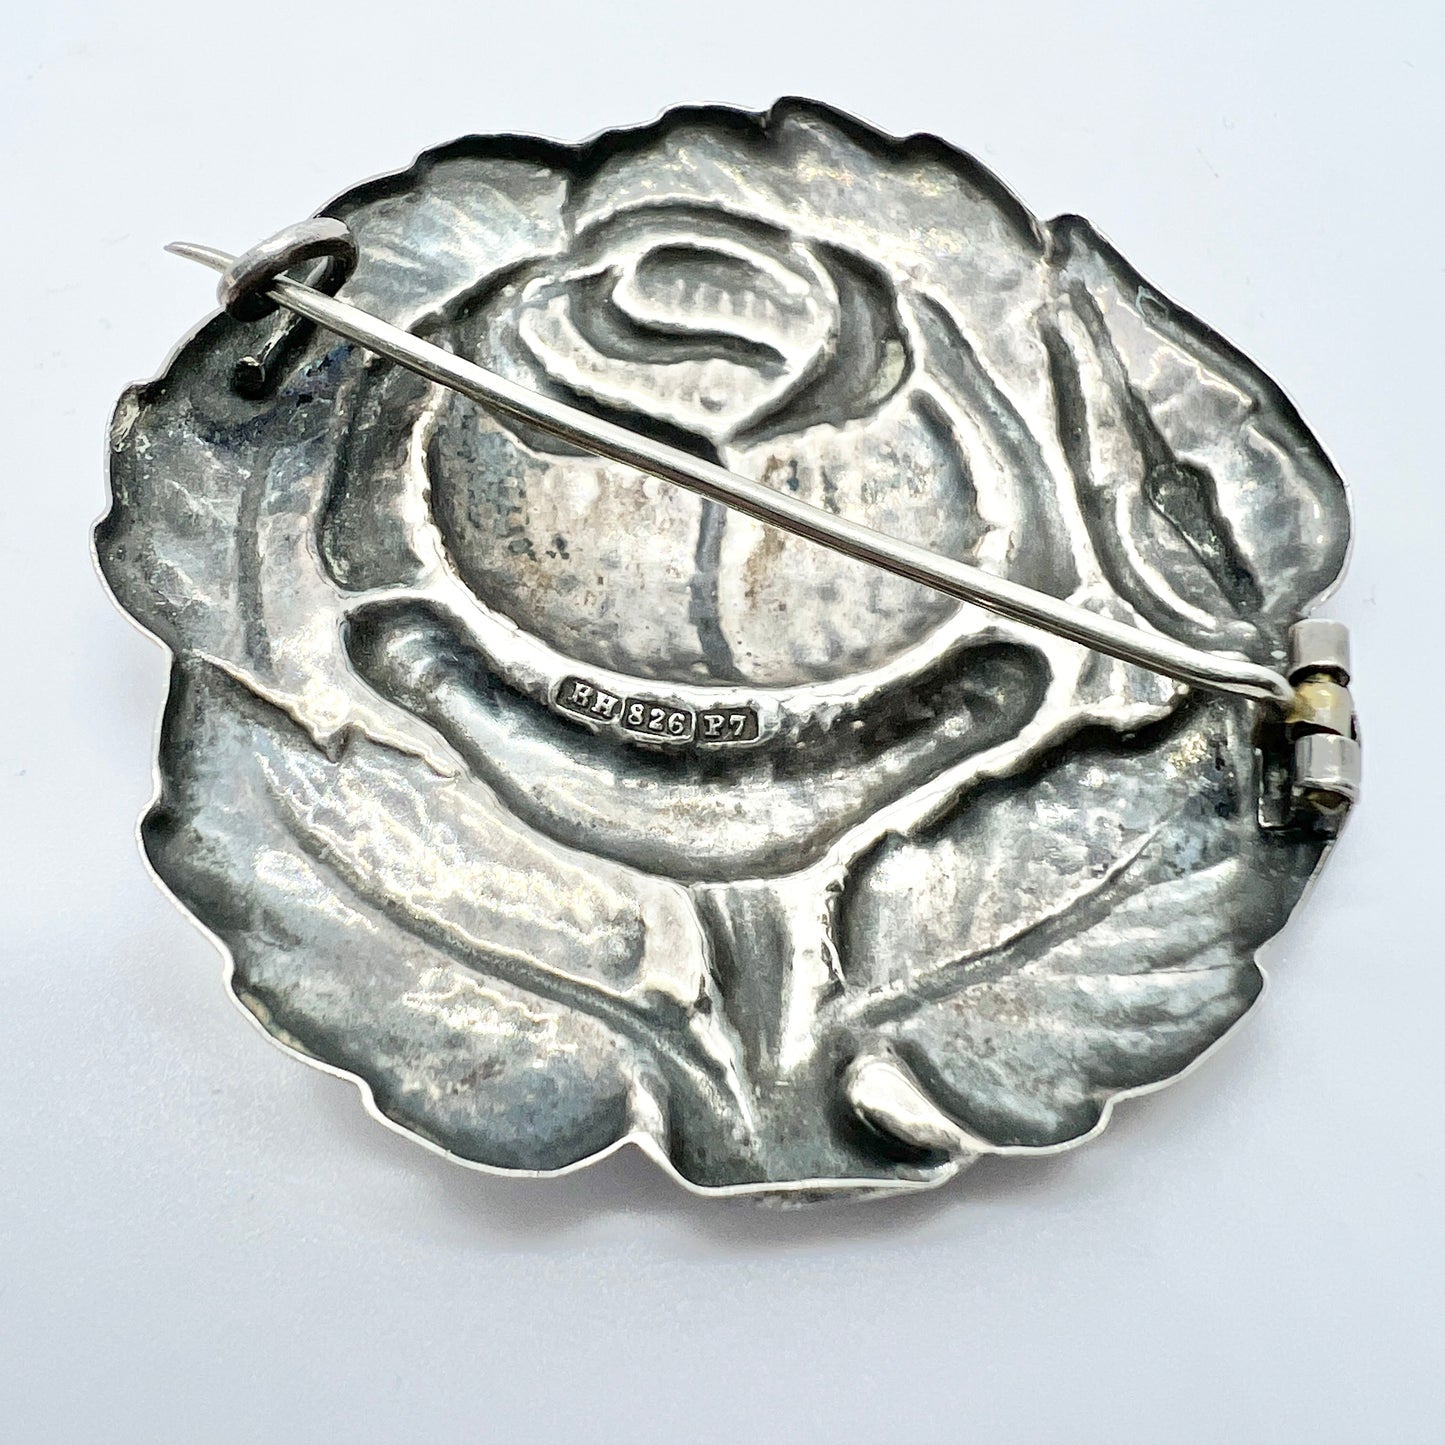 Bernhard Hertz, Denmark 1917 Antique Rose Flower Solid Silver Brooch.